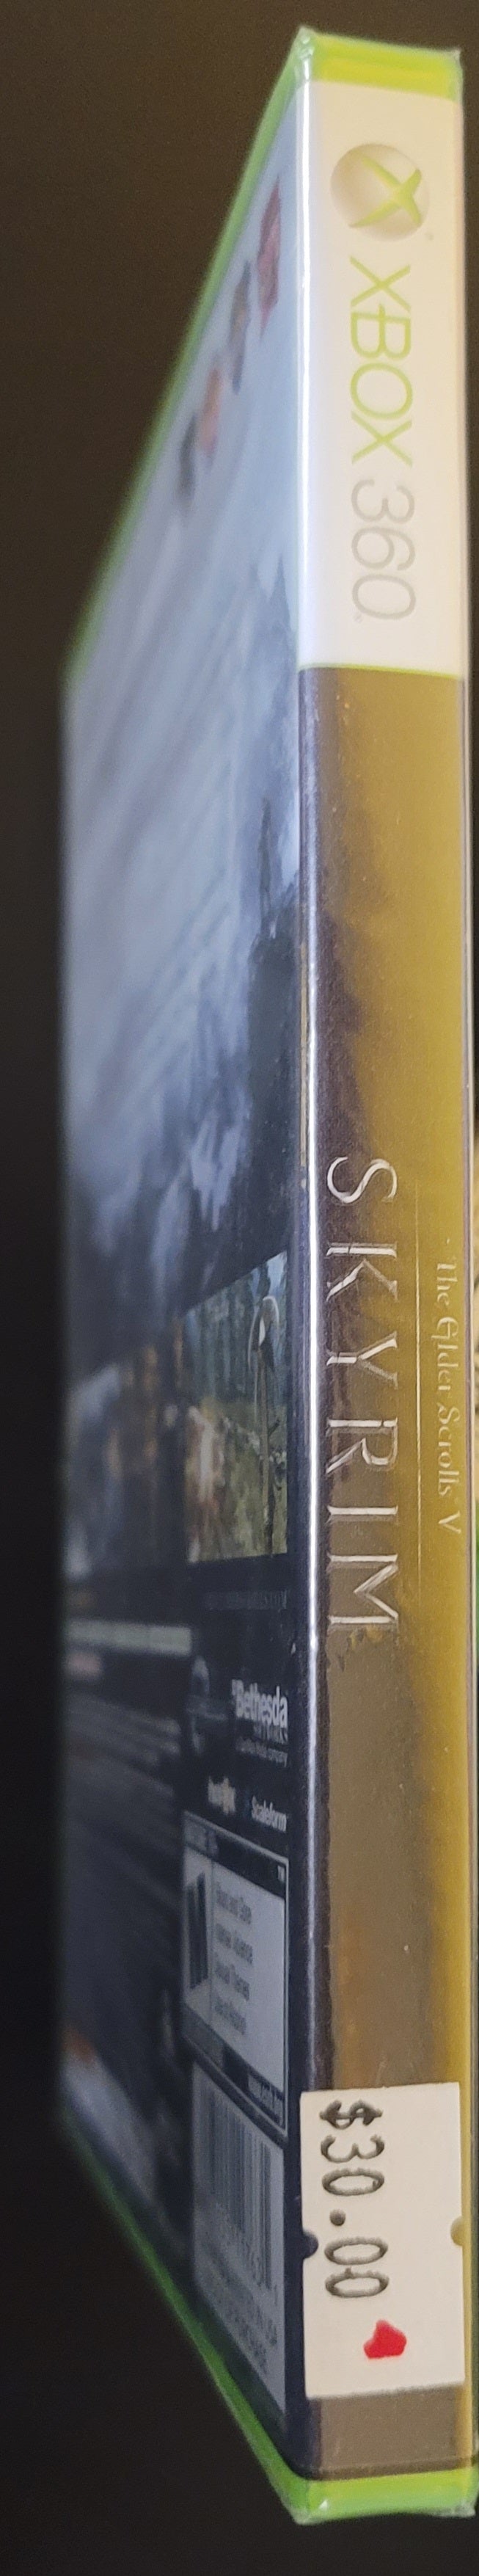 Skyrim, Elder Scrolls 5- Xb360 - Sealed